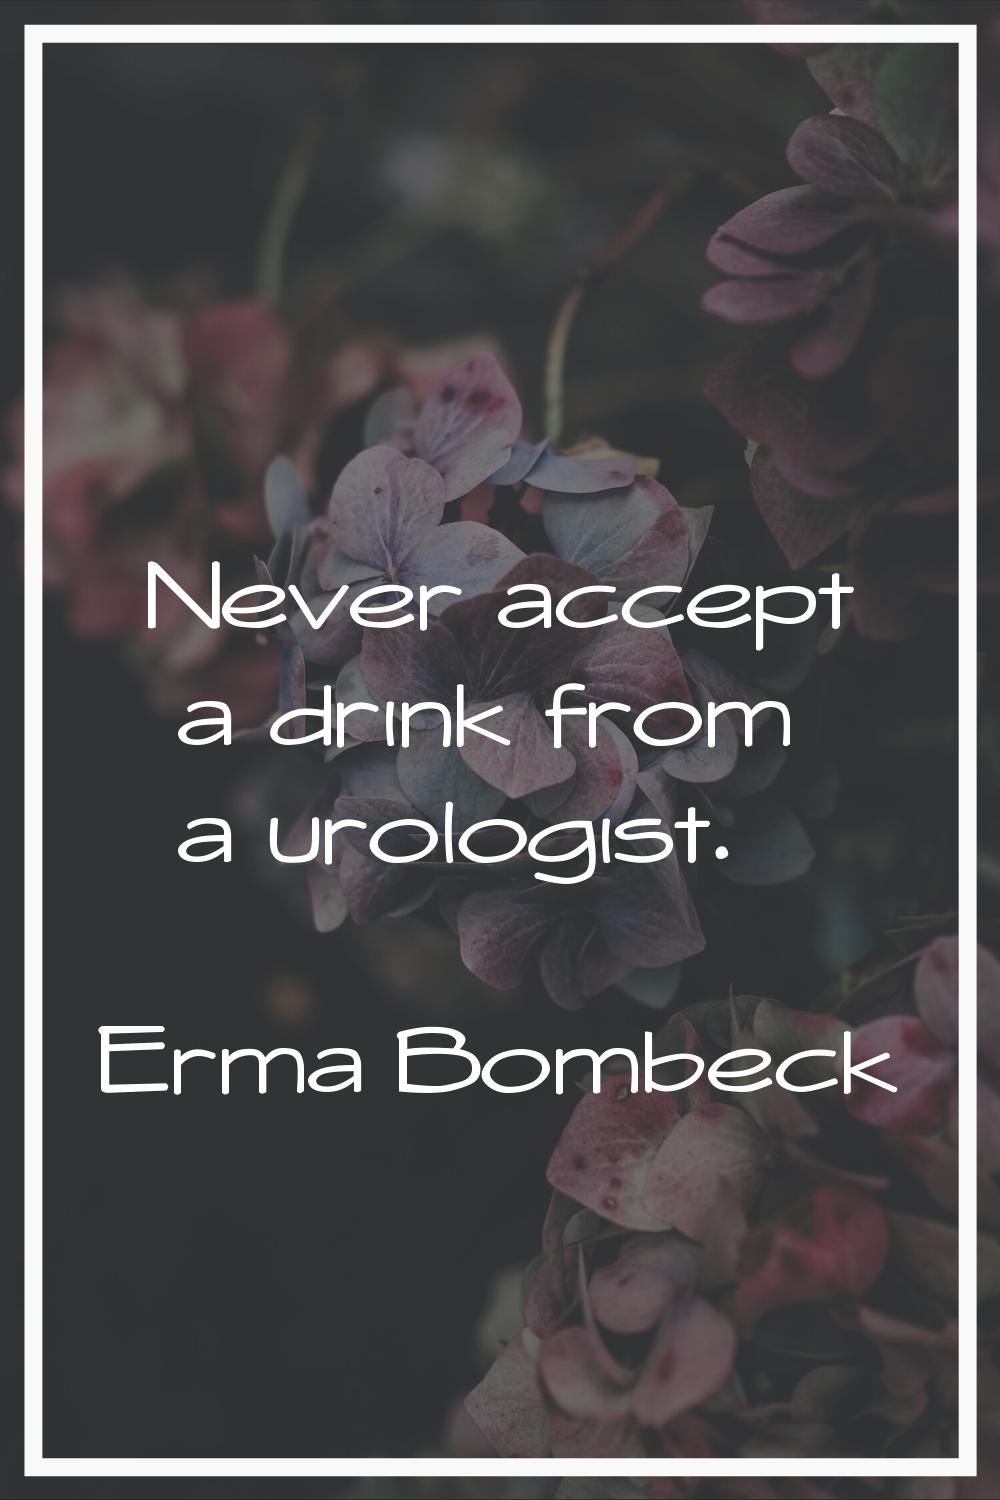 Never accept a drink from a urologist.